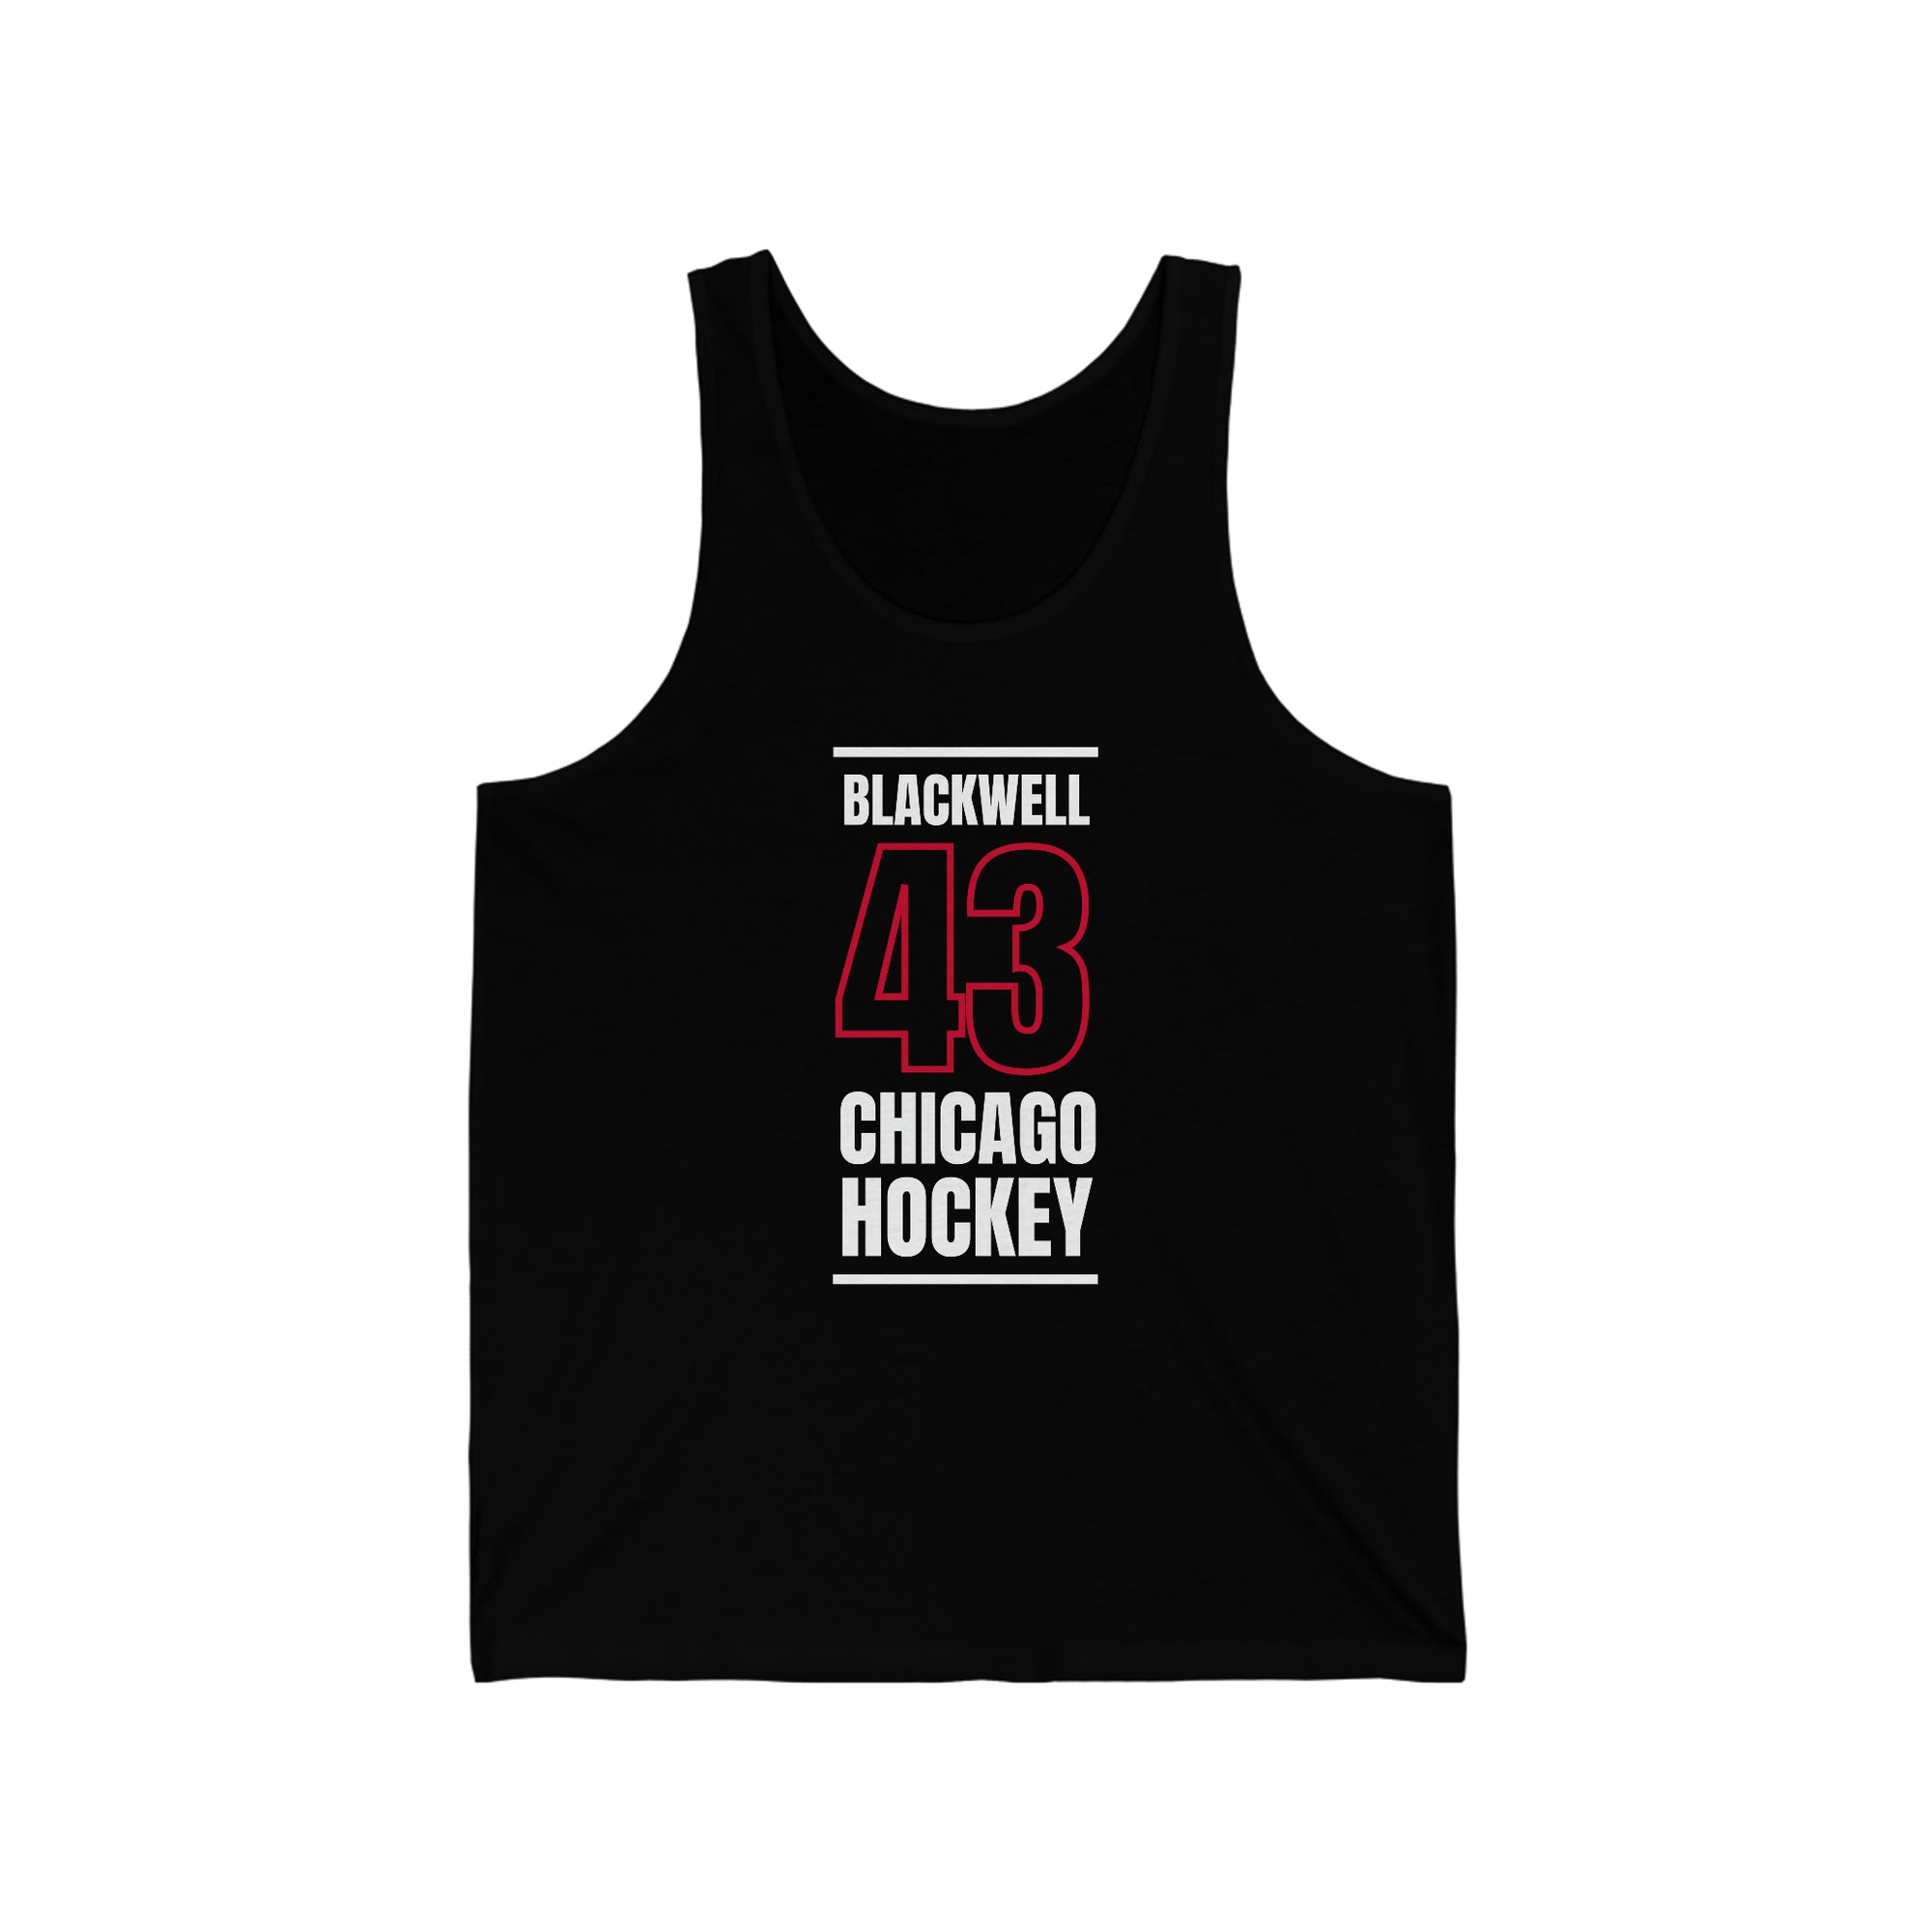 Blackwell 43 Chicago Hockey Black Vertical Design Unisex Jersey Tank Top